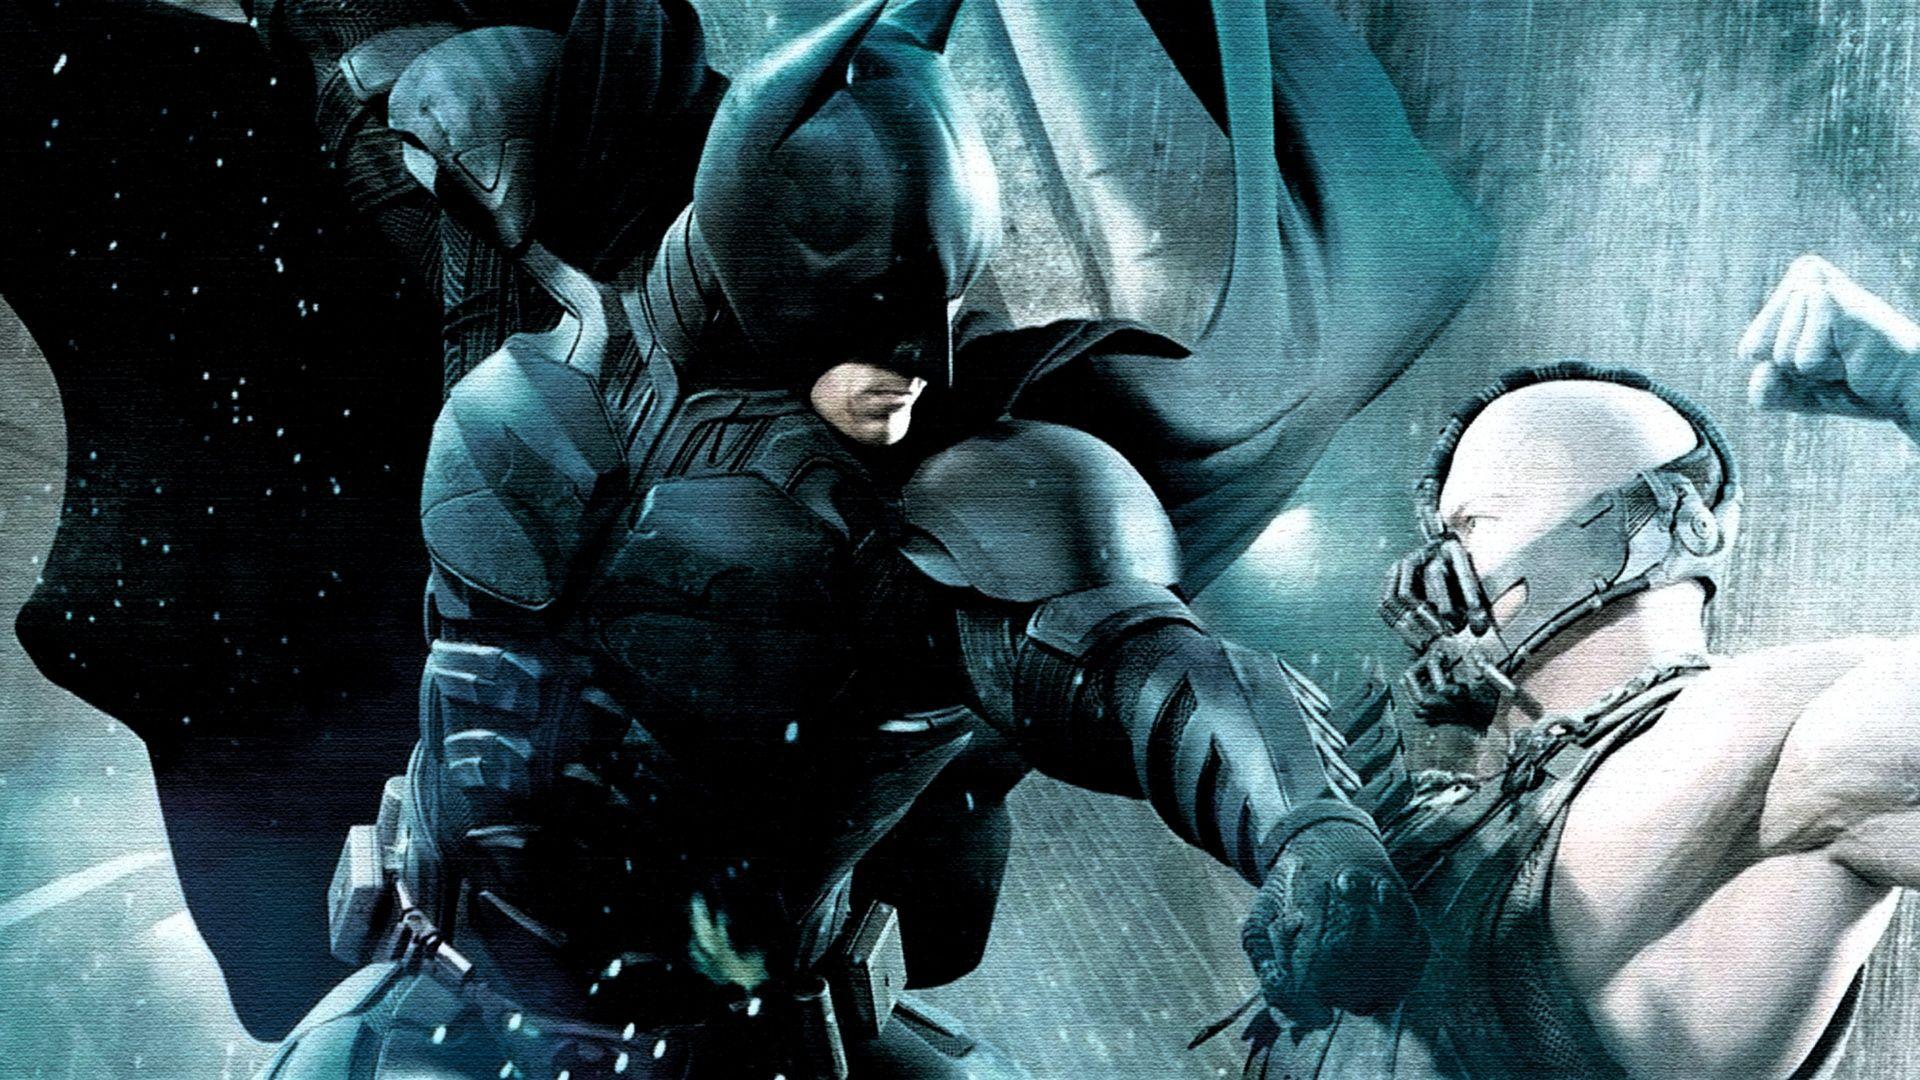 Batman HD Wallpaper for desktop download